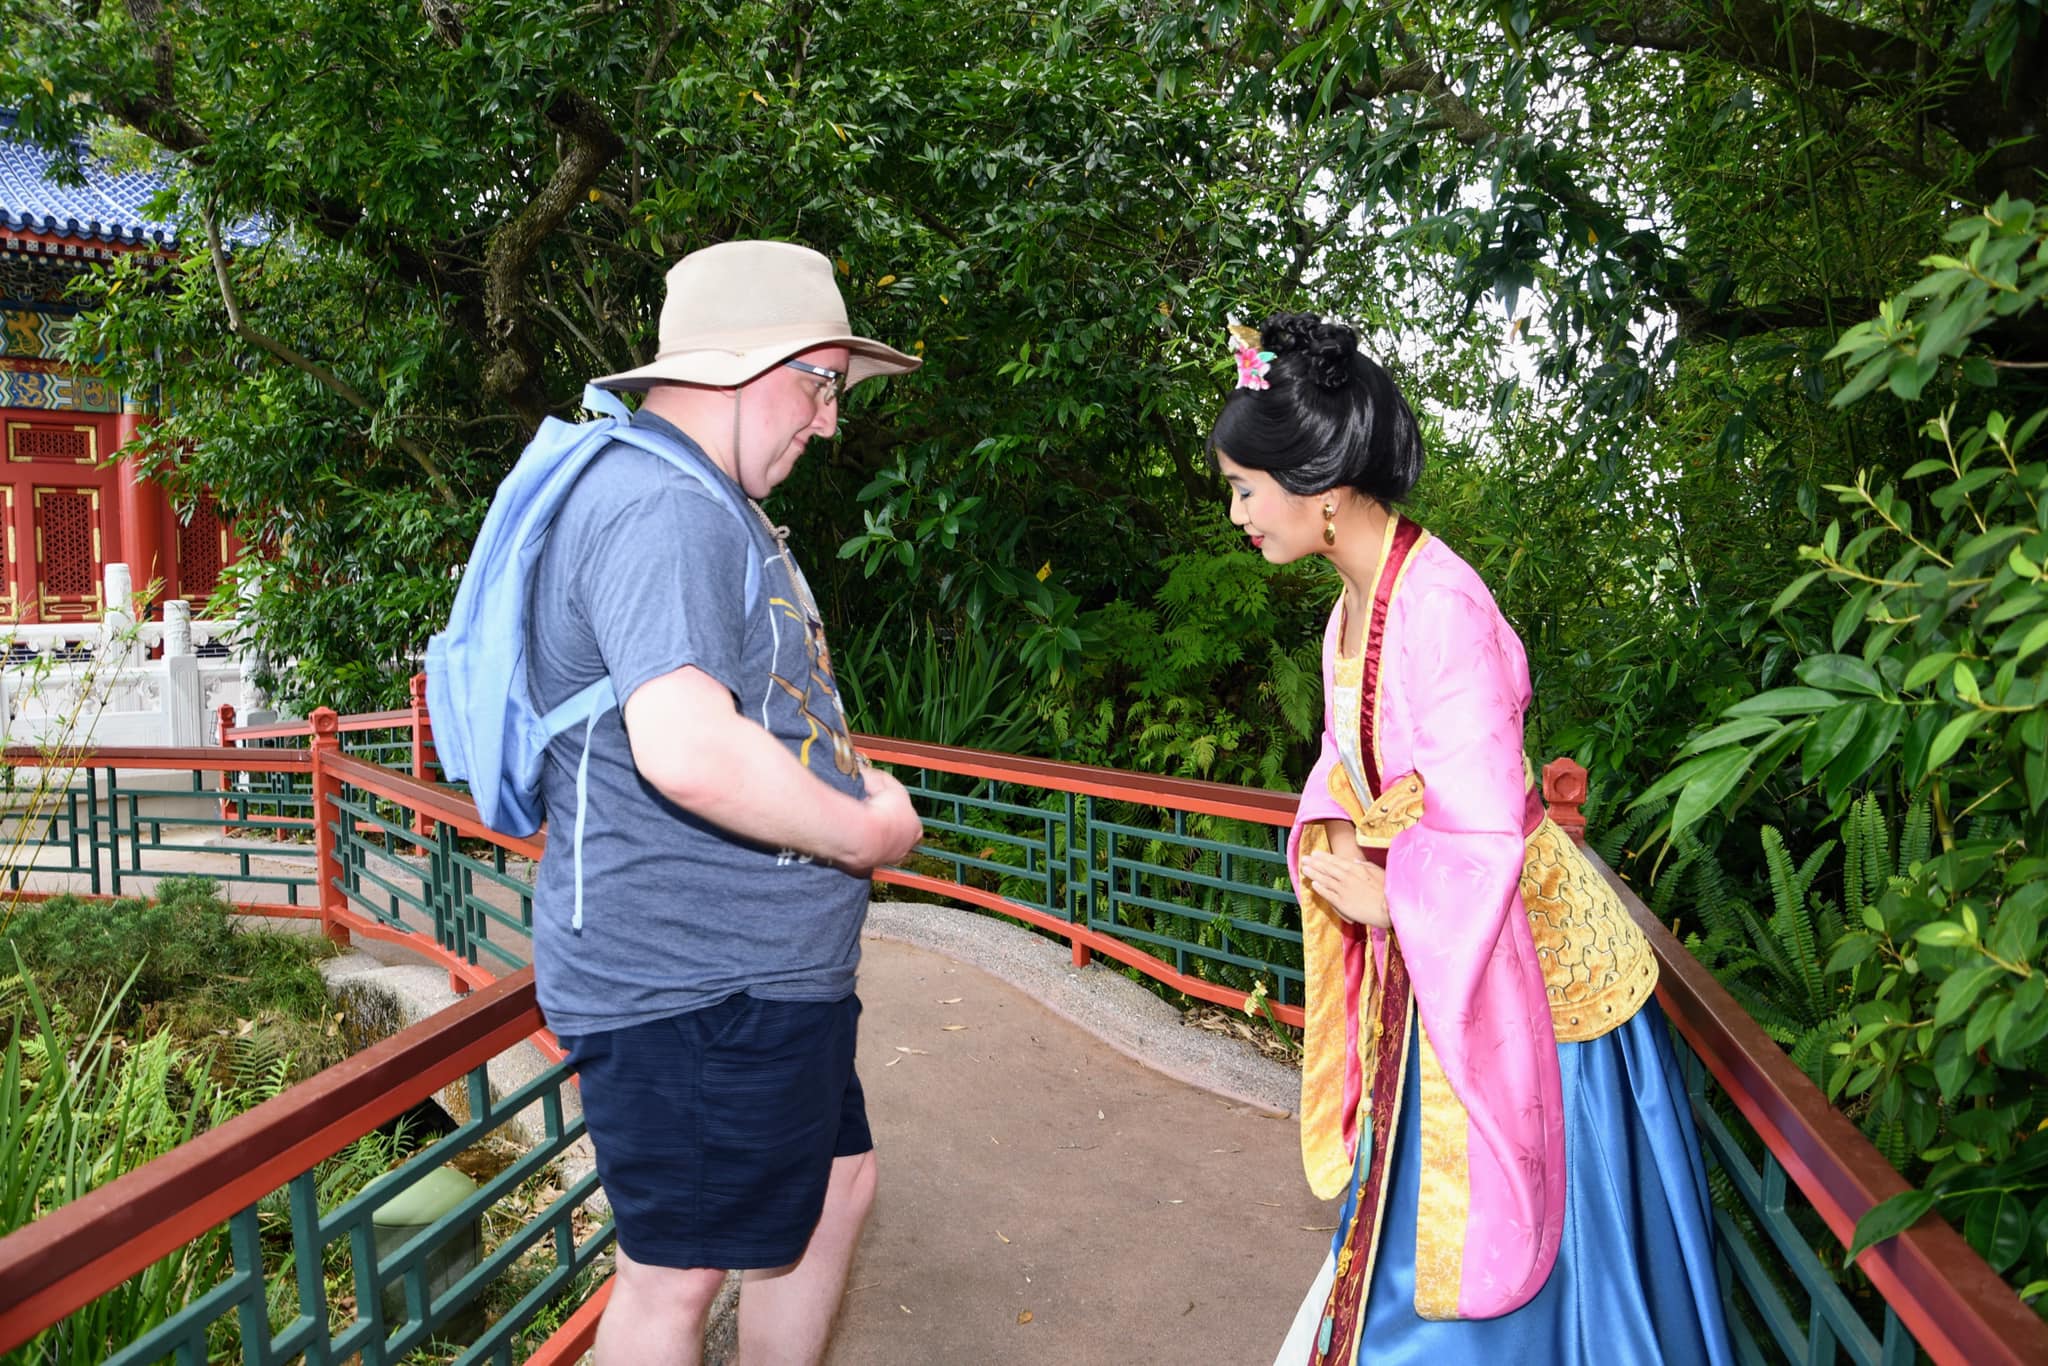 Chatting with Mulan